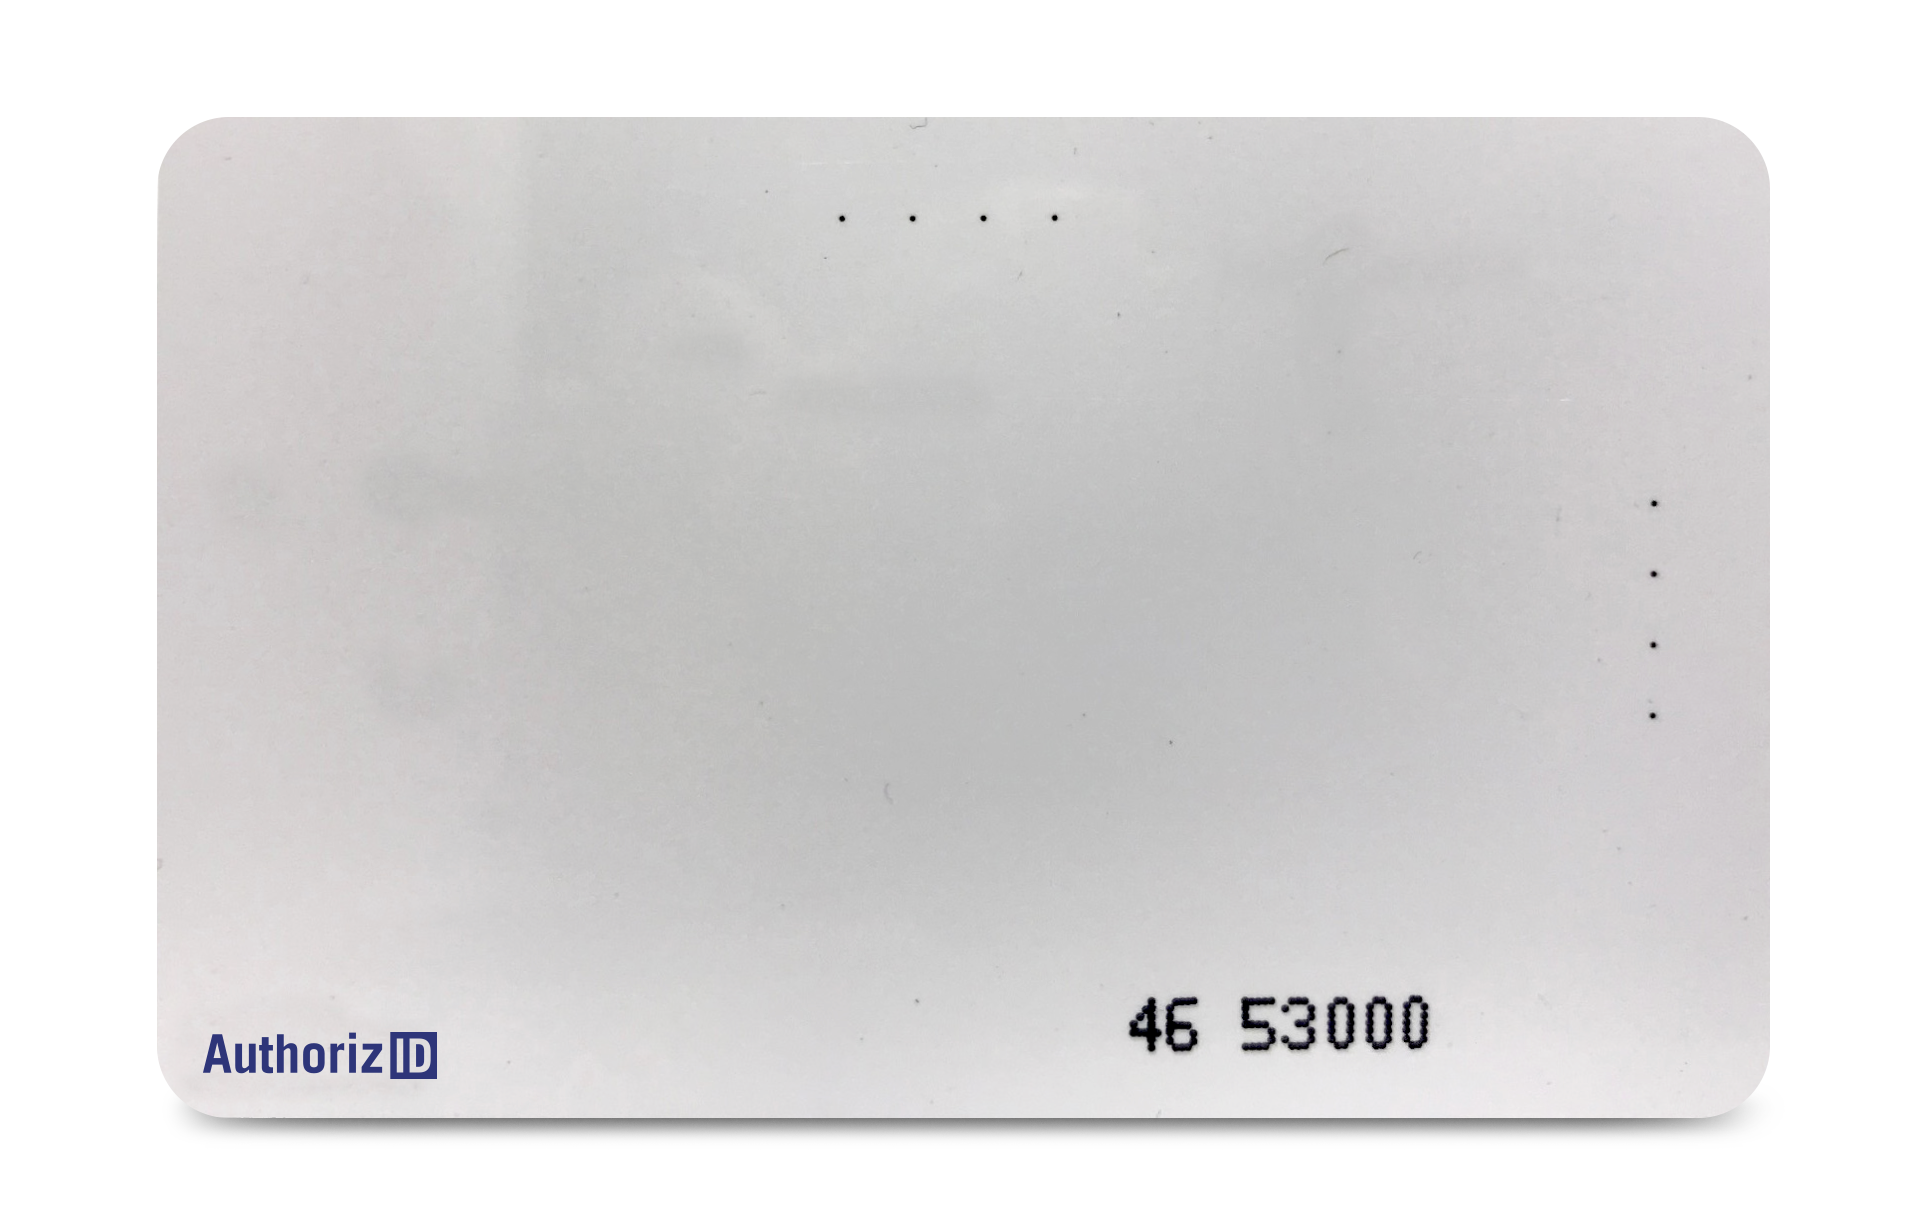 Proxy 80. CR-80 карта. RFID стикер Wiegand 26 bit. ID-1 (CR-80) карта. Fp0500a 26bit электроника Cem-603 проксимити считывателя,w26bit.